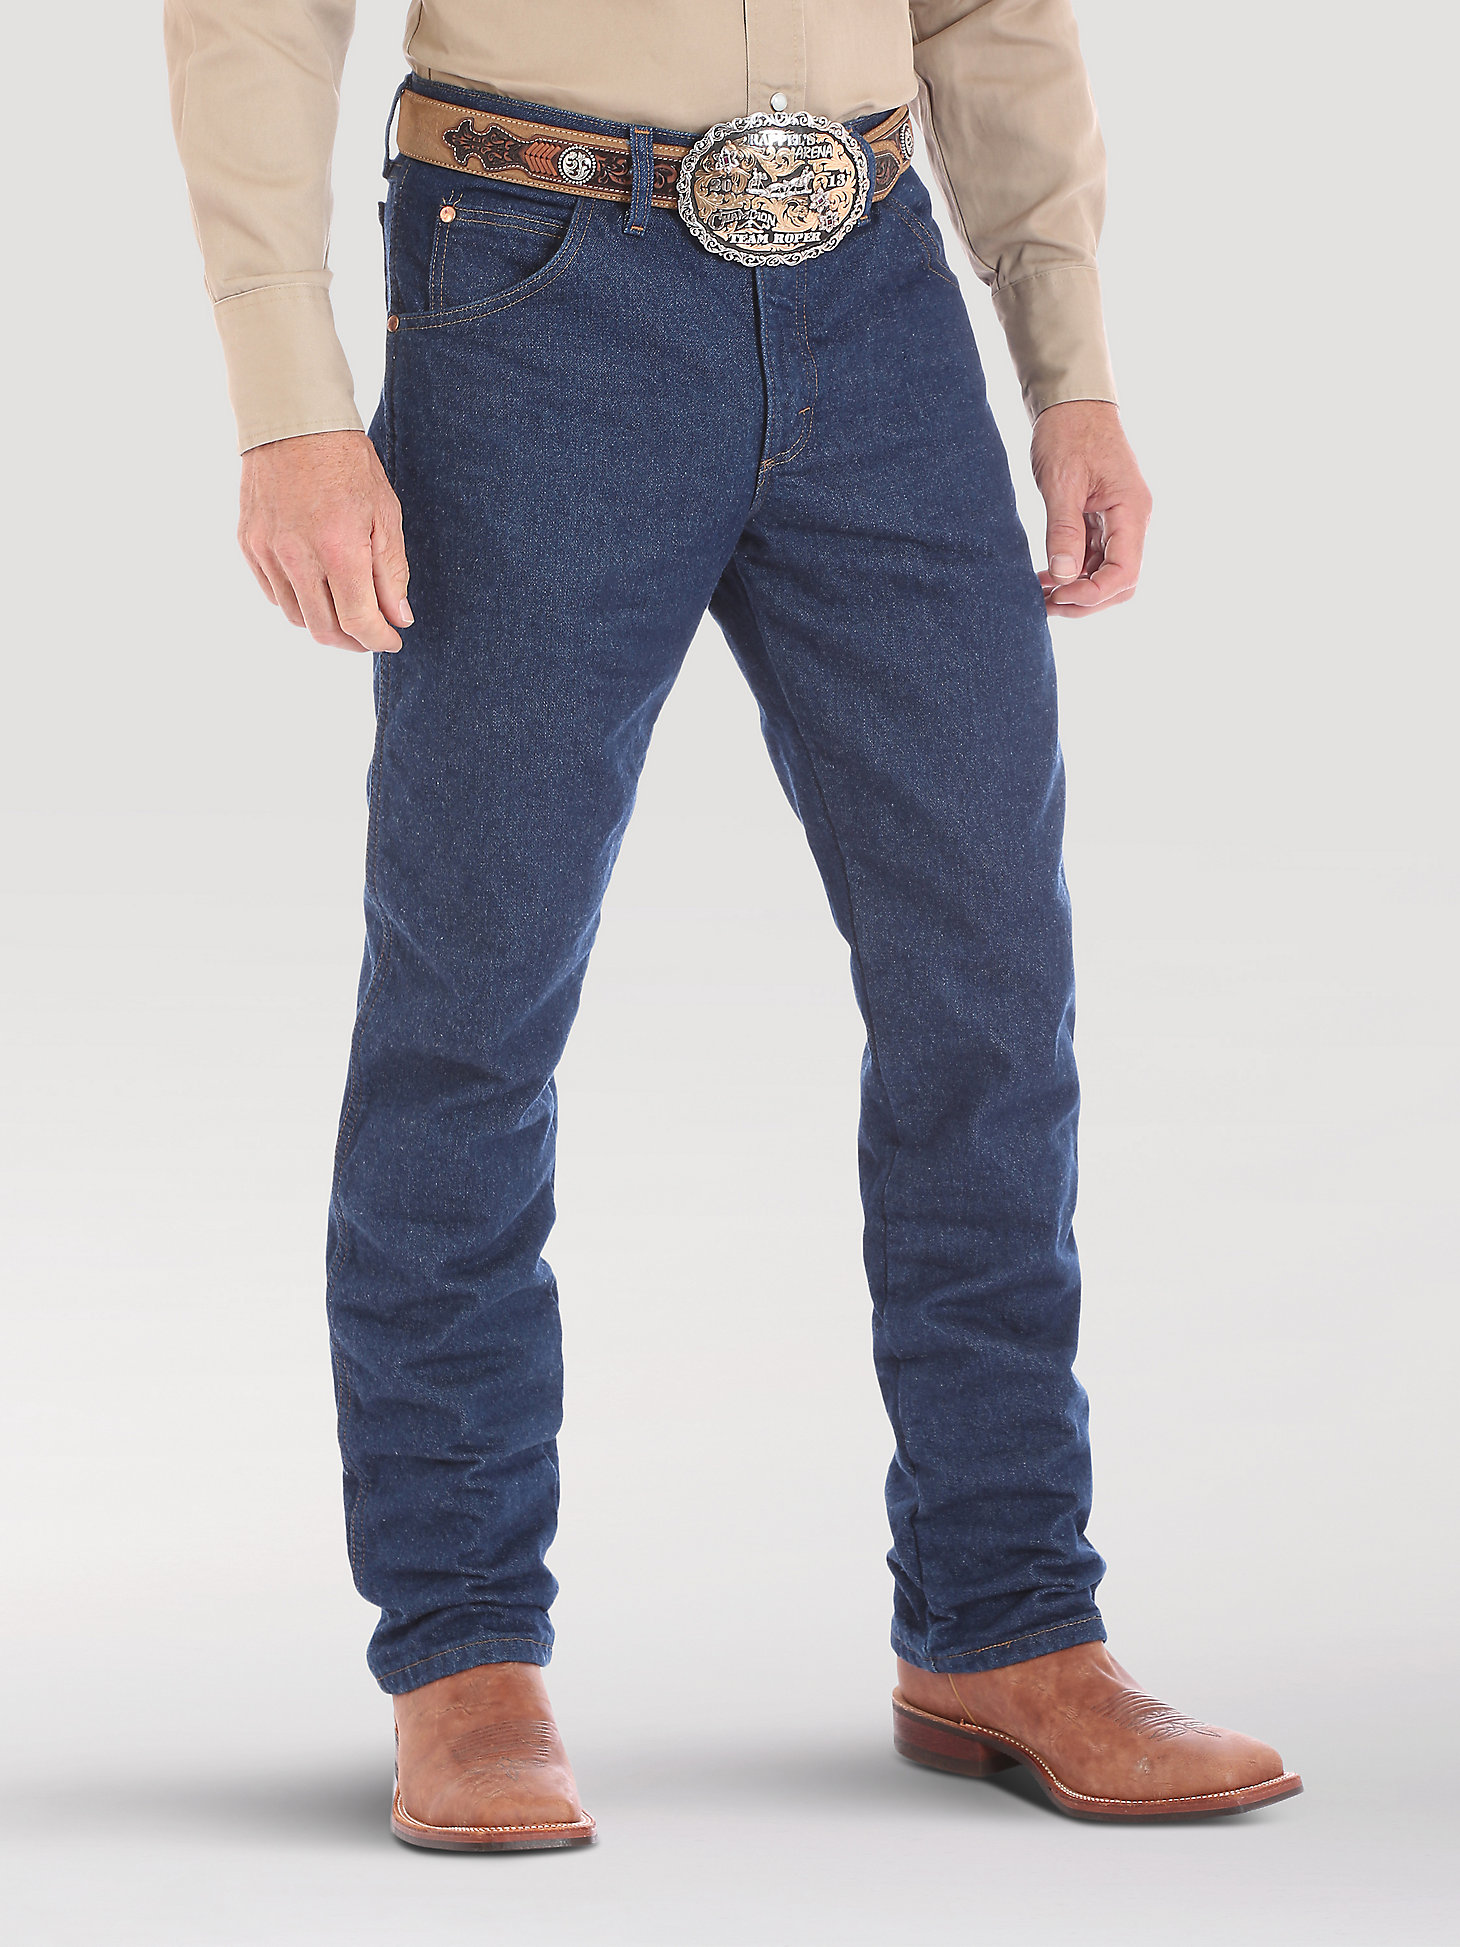 Premium Performance Cowboy Cut® Regular Fit Jean - Flannel Lined in Stonewash main view